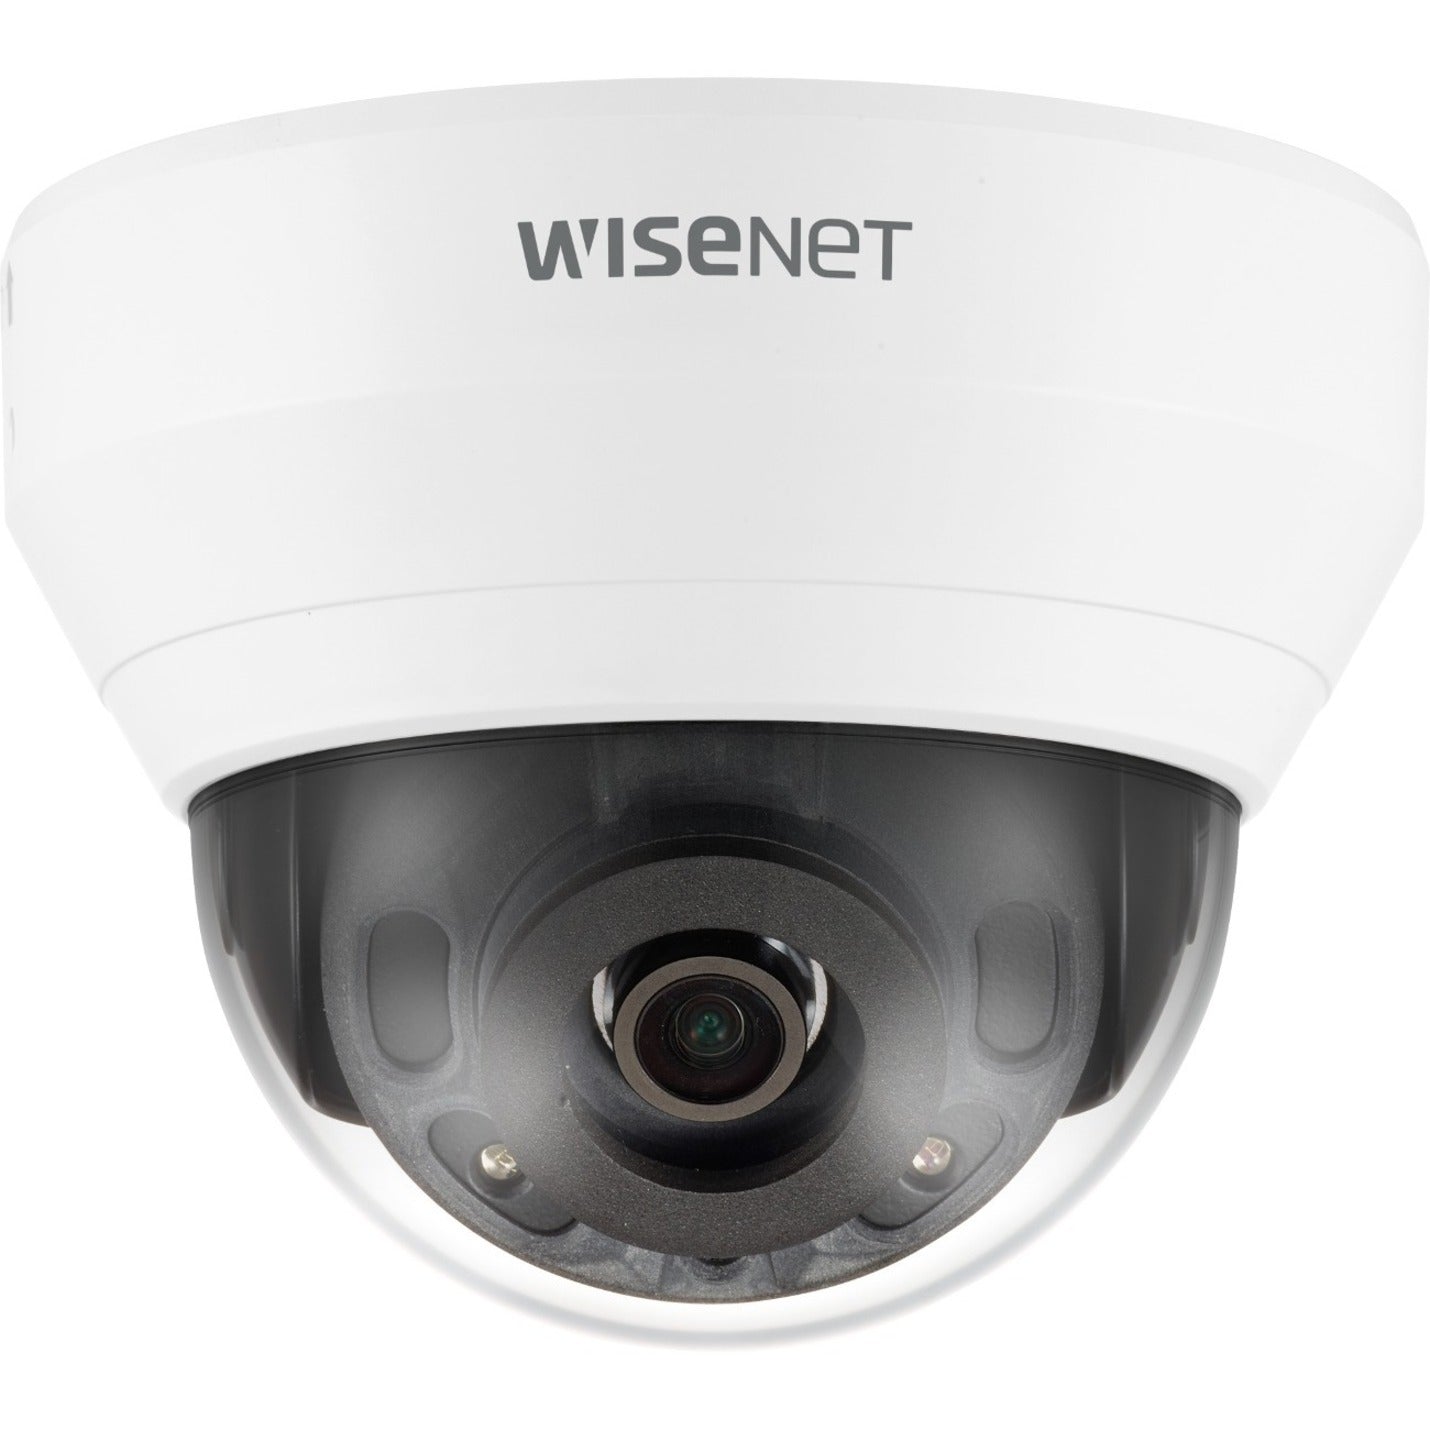 Wisenet QNV-7032R 4MP Network IR Vandal Resistant Camera, Color Dome